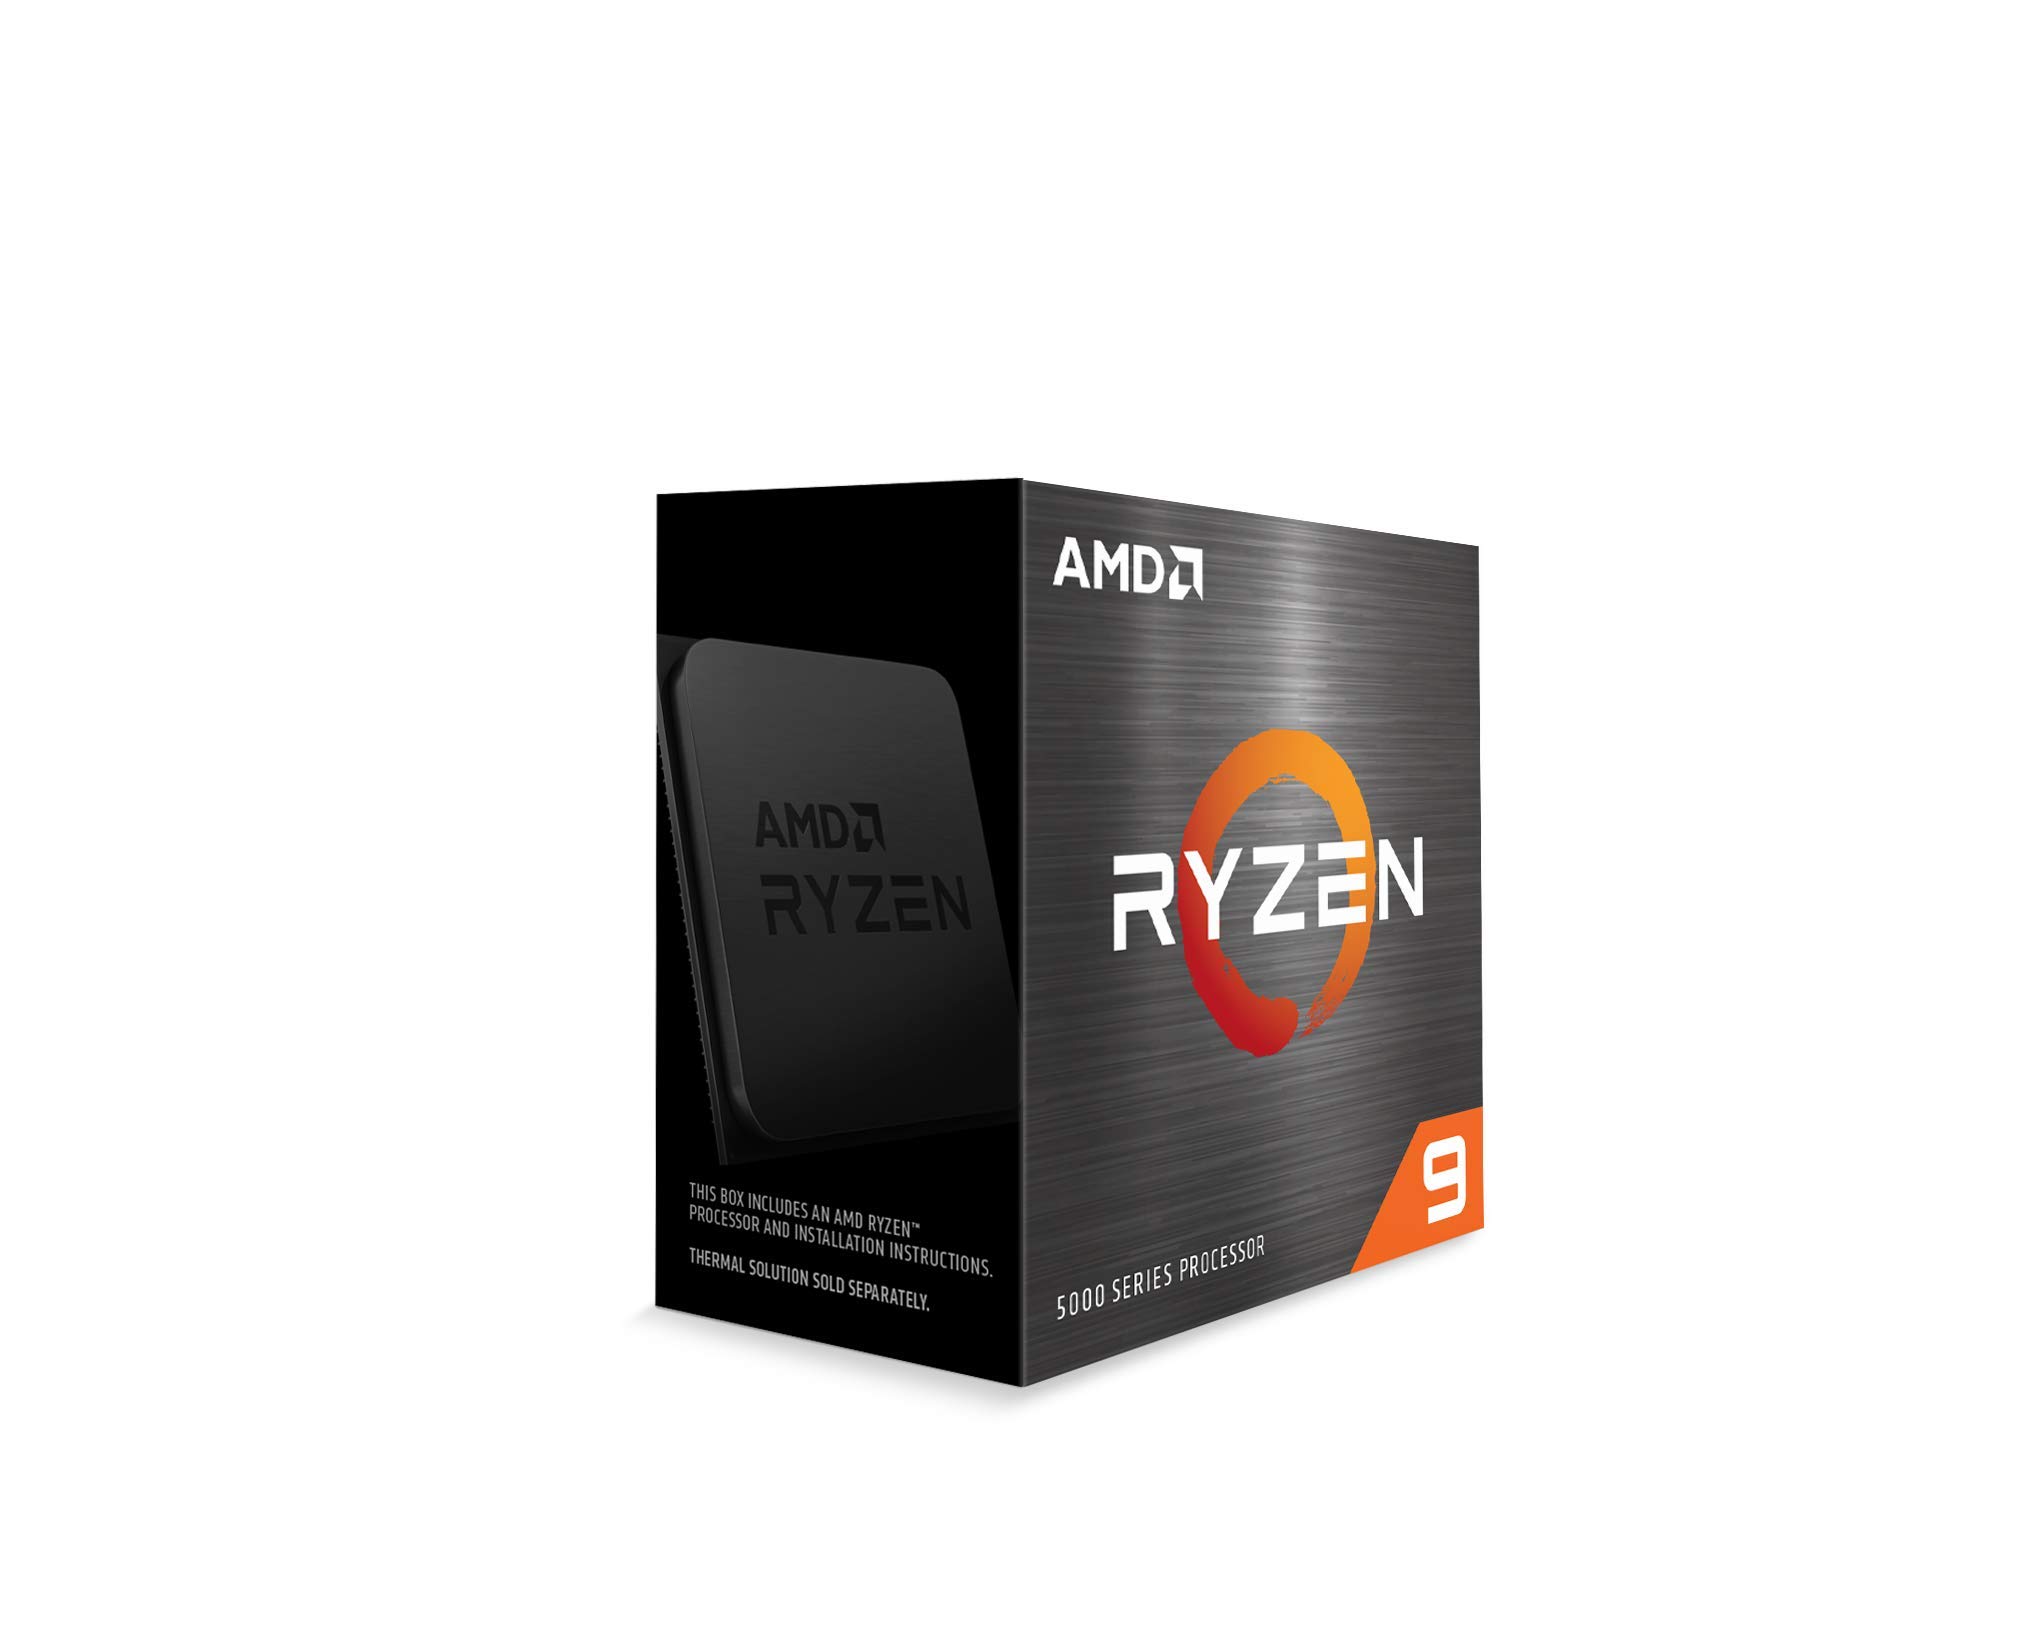 AMD Ryzen 9 5900x 12 Core CPU AM4 $299.99 @ Amazon $300